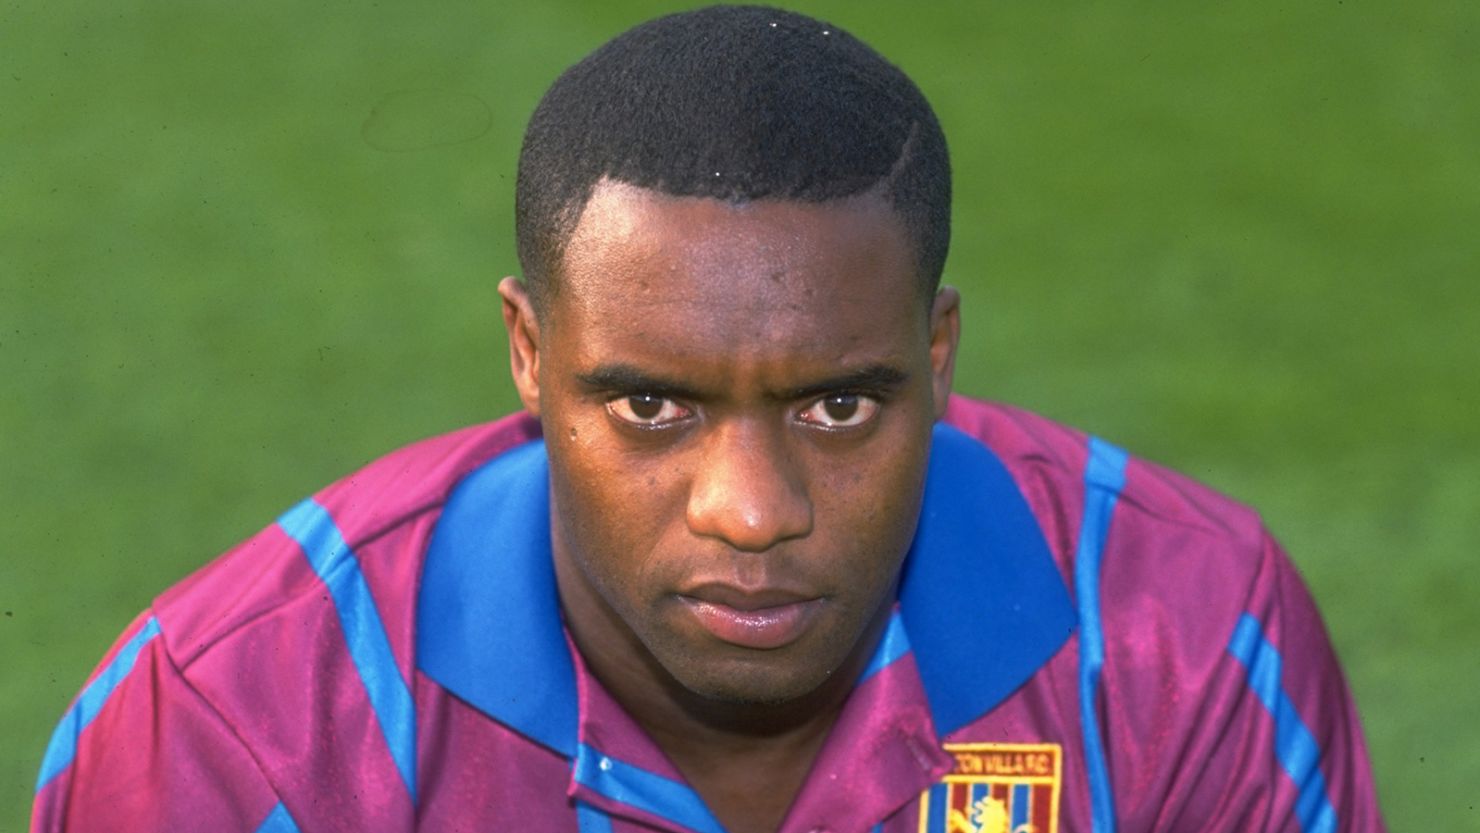 A 1993 portrait of Dalian Atkinson as an Aston Villa player